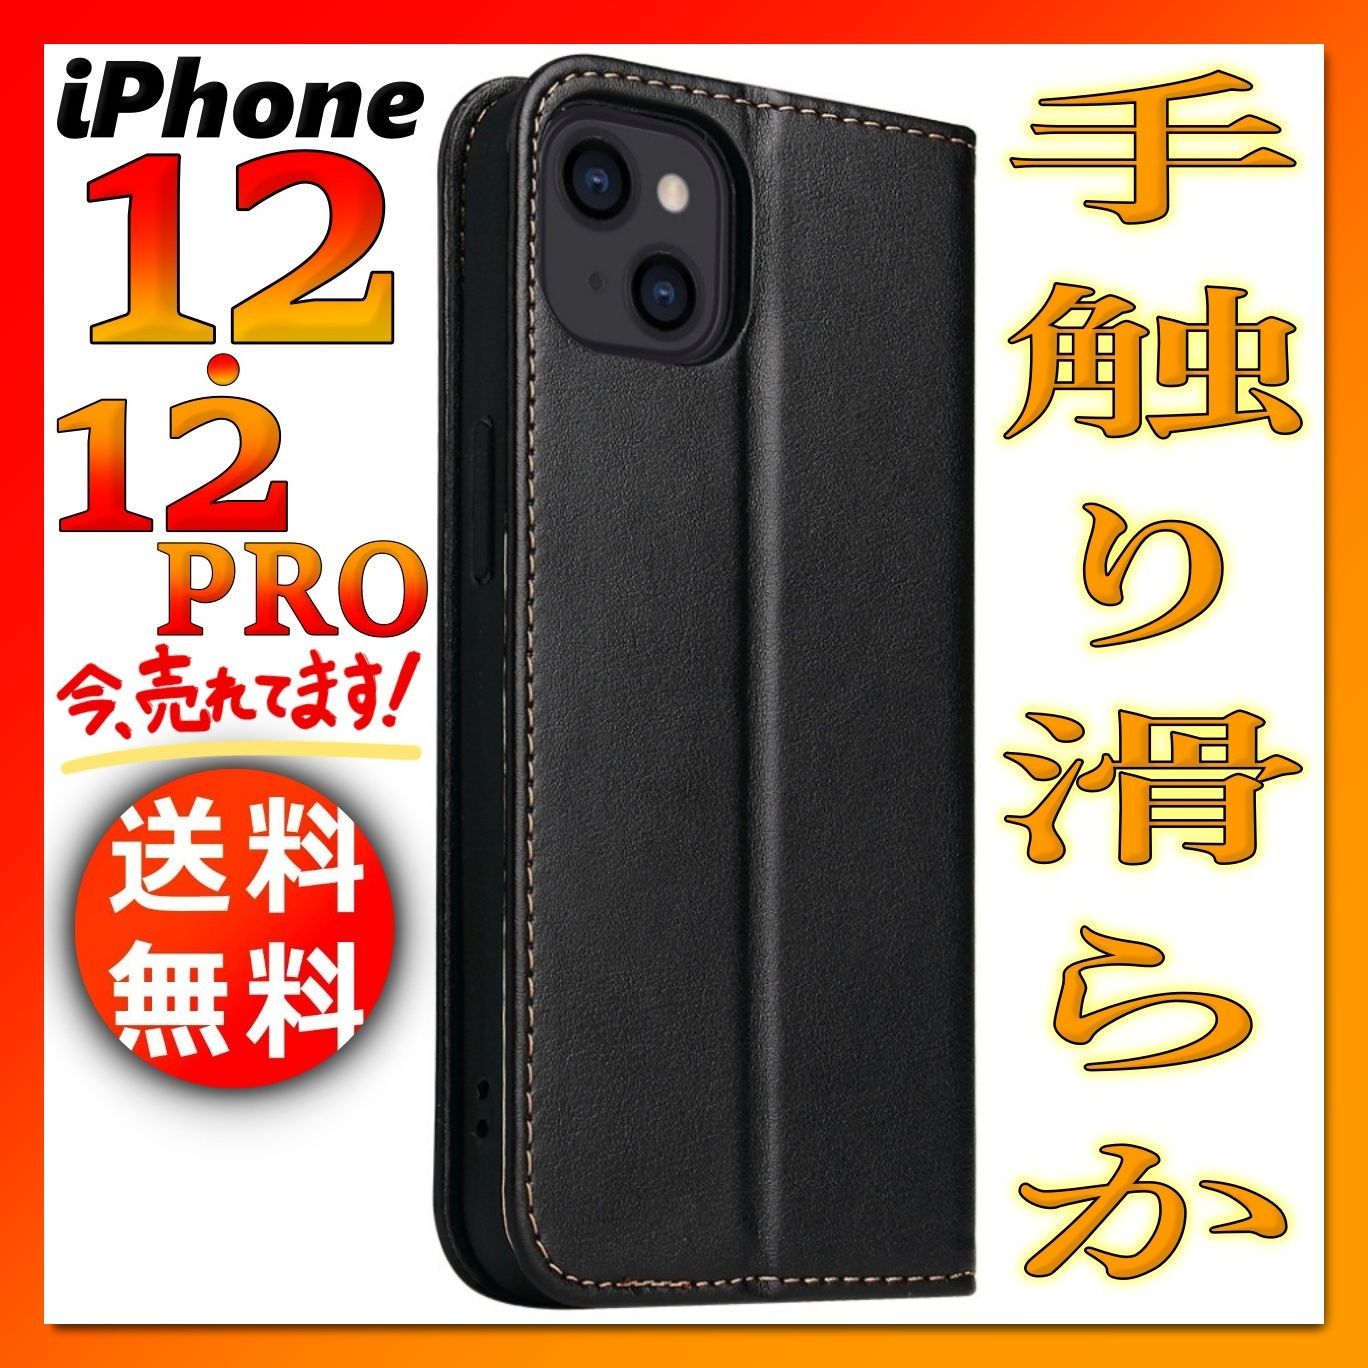 Lezalic iPhone ケース 11,11pro,11promax,12 12pro,12mini, (iphone11, パープル) 通販 